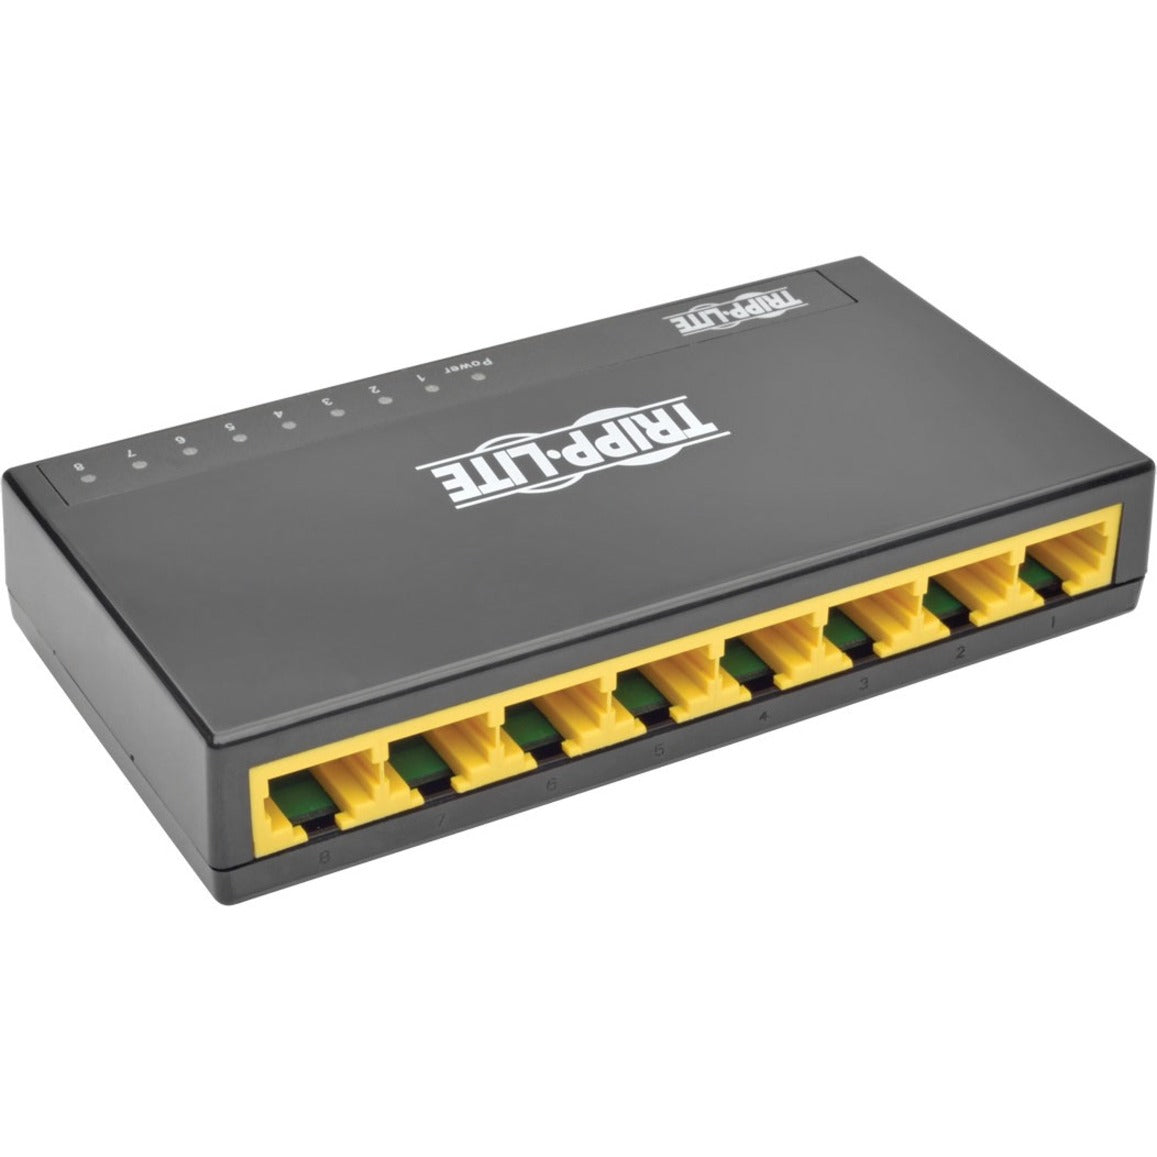 Tripp Lite NG8P 8-Puerto 10/100/1000 Mbps Escritorio Conmutador Ethernet Gigabit No Administrado Garantía de 5 Años Certificado RoHS.